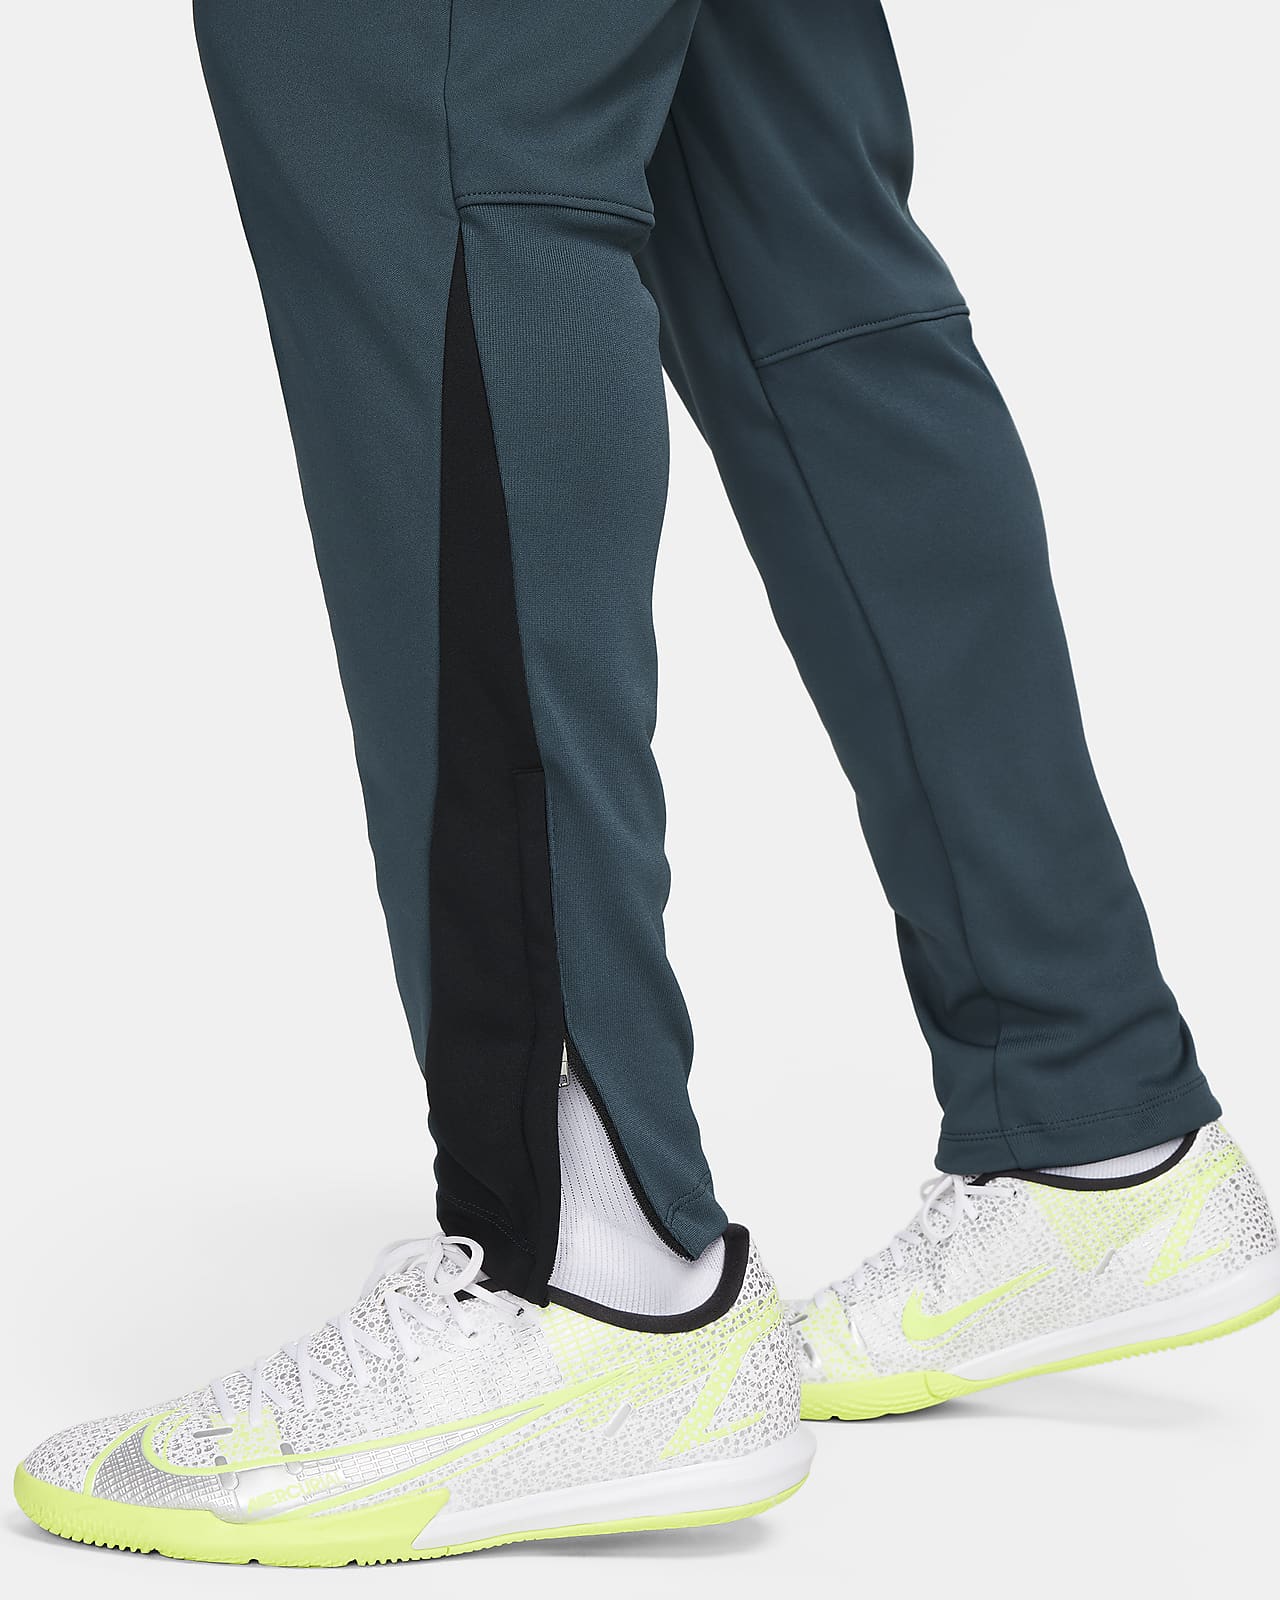 Nike Men's Therma-FIT Strike Winter Warrior Soccer Pants